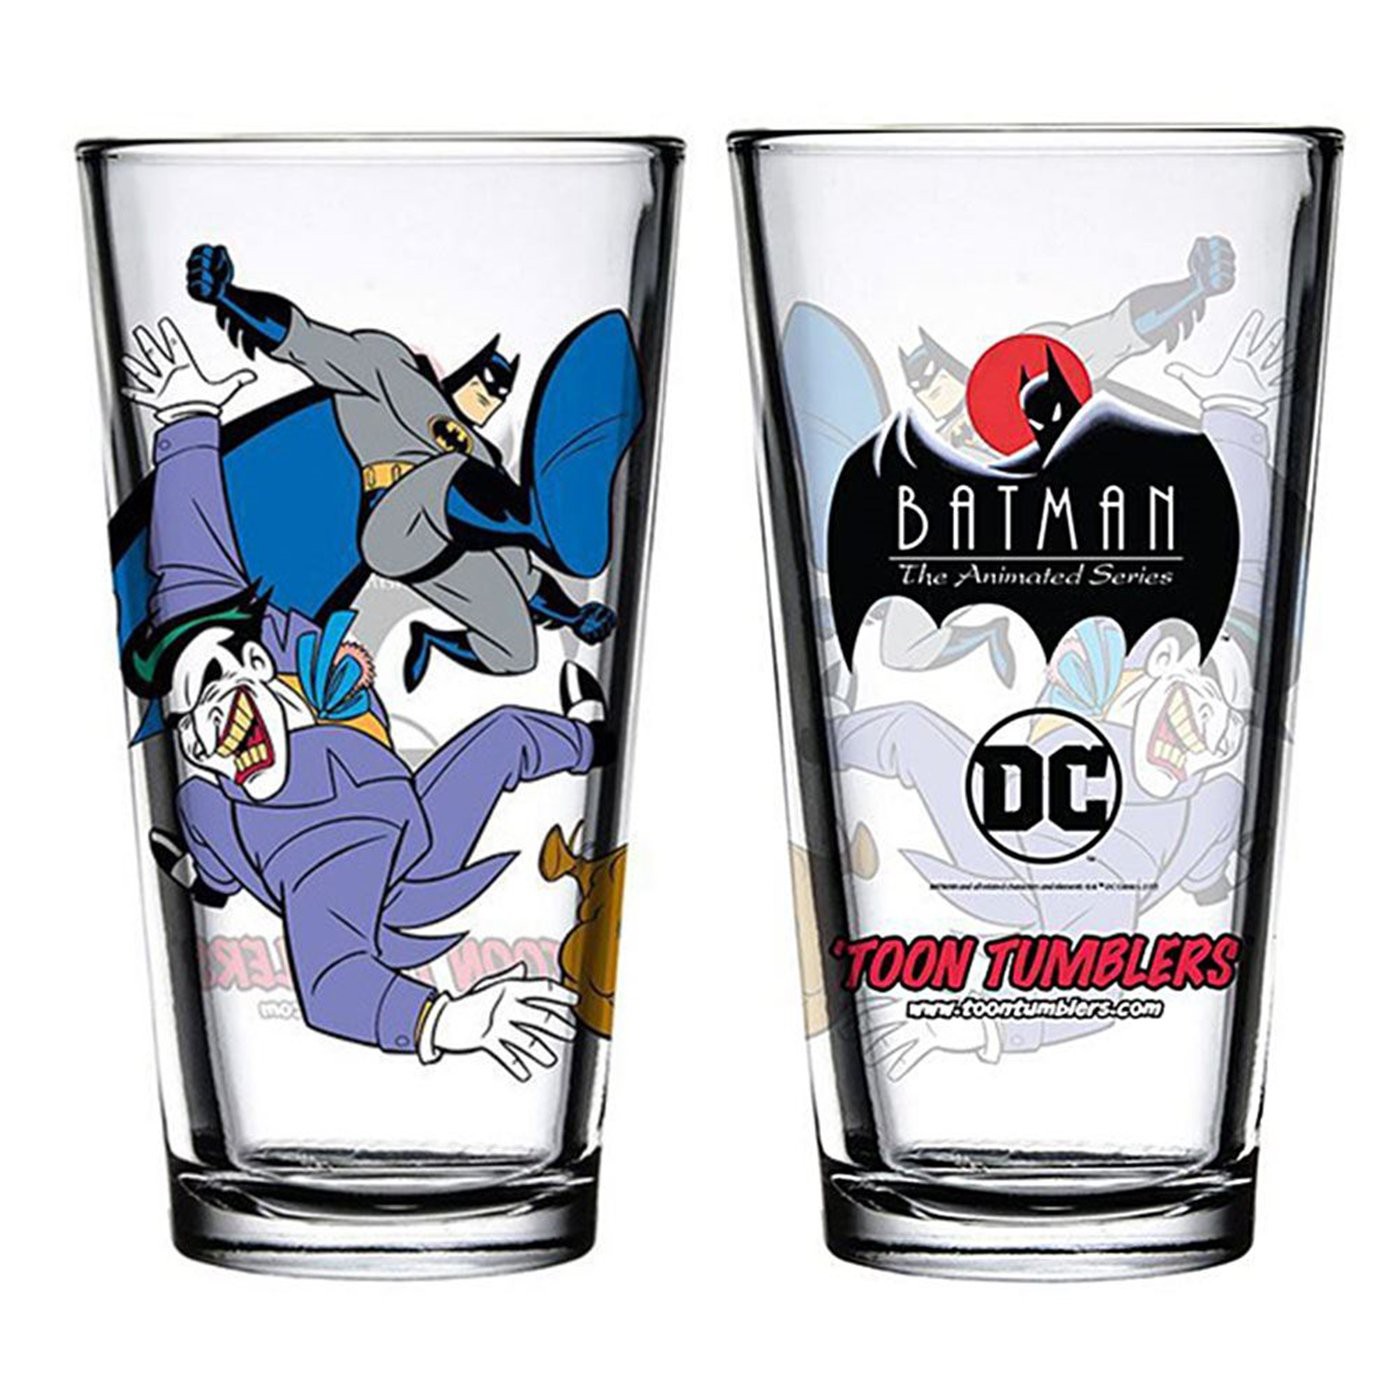 Batman and Joker Animated Series Pint Glass